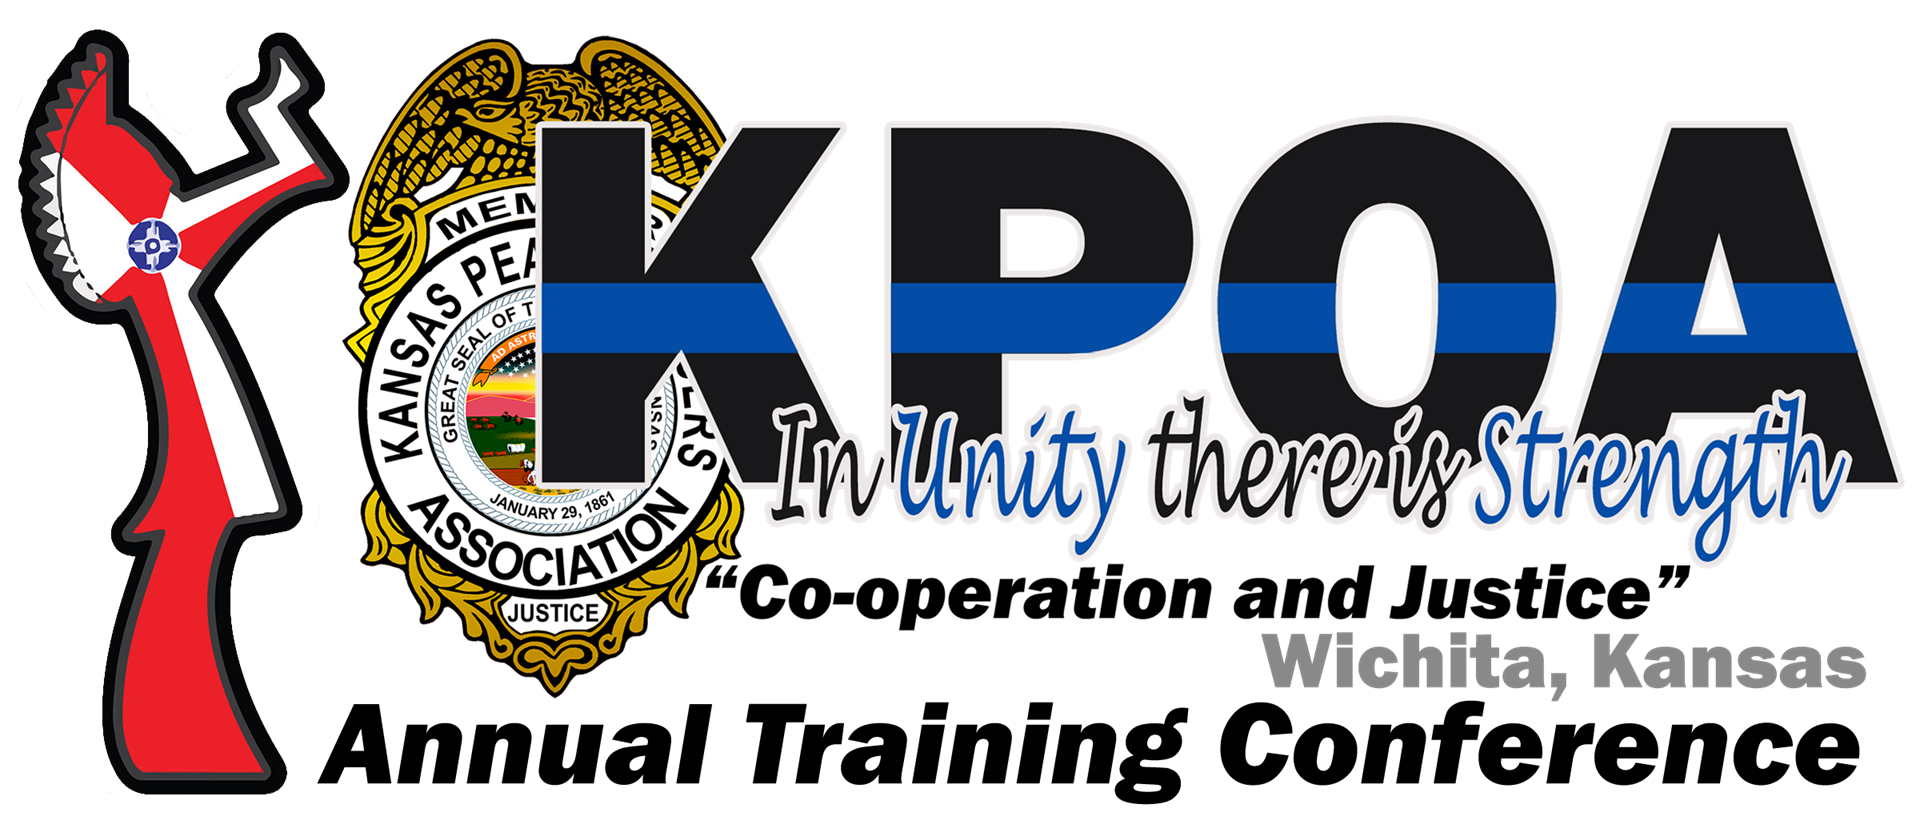 KPOA Annual Training Conference - Wichita, Kansas